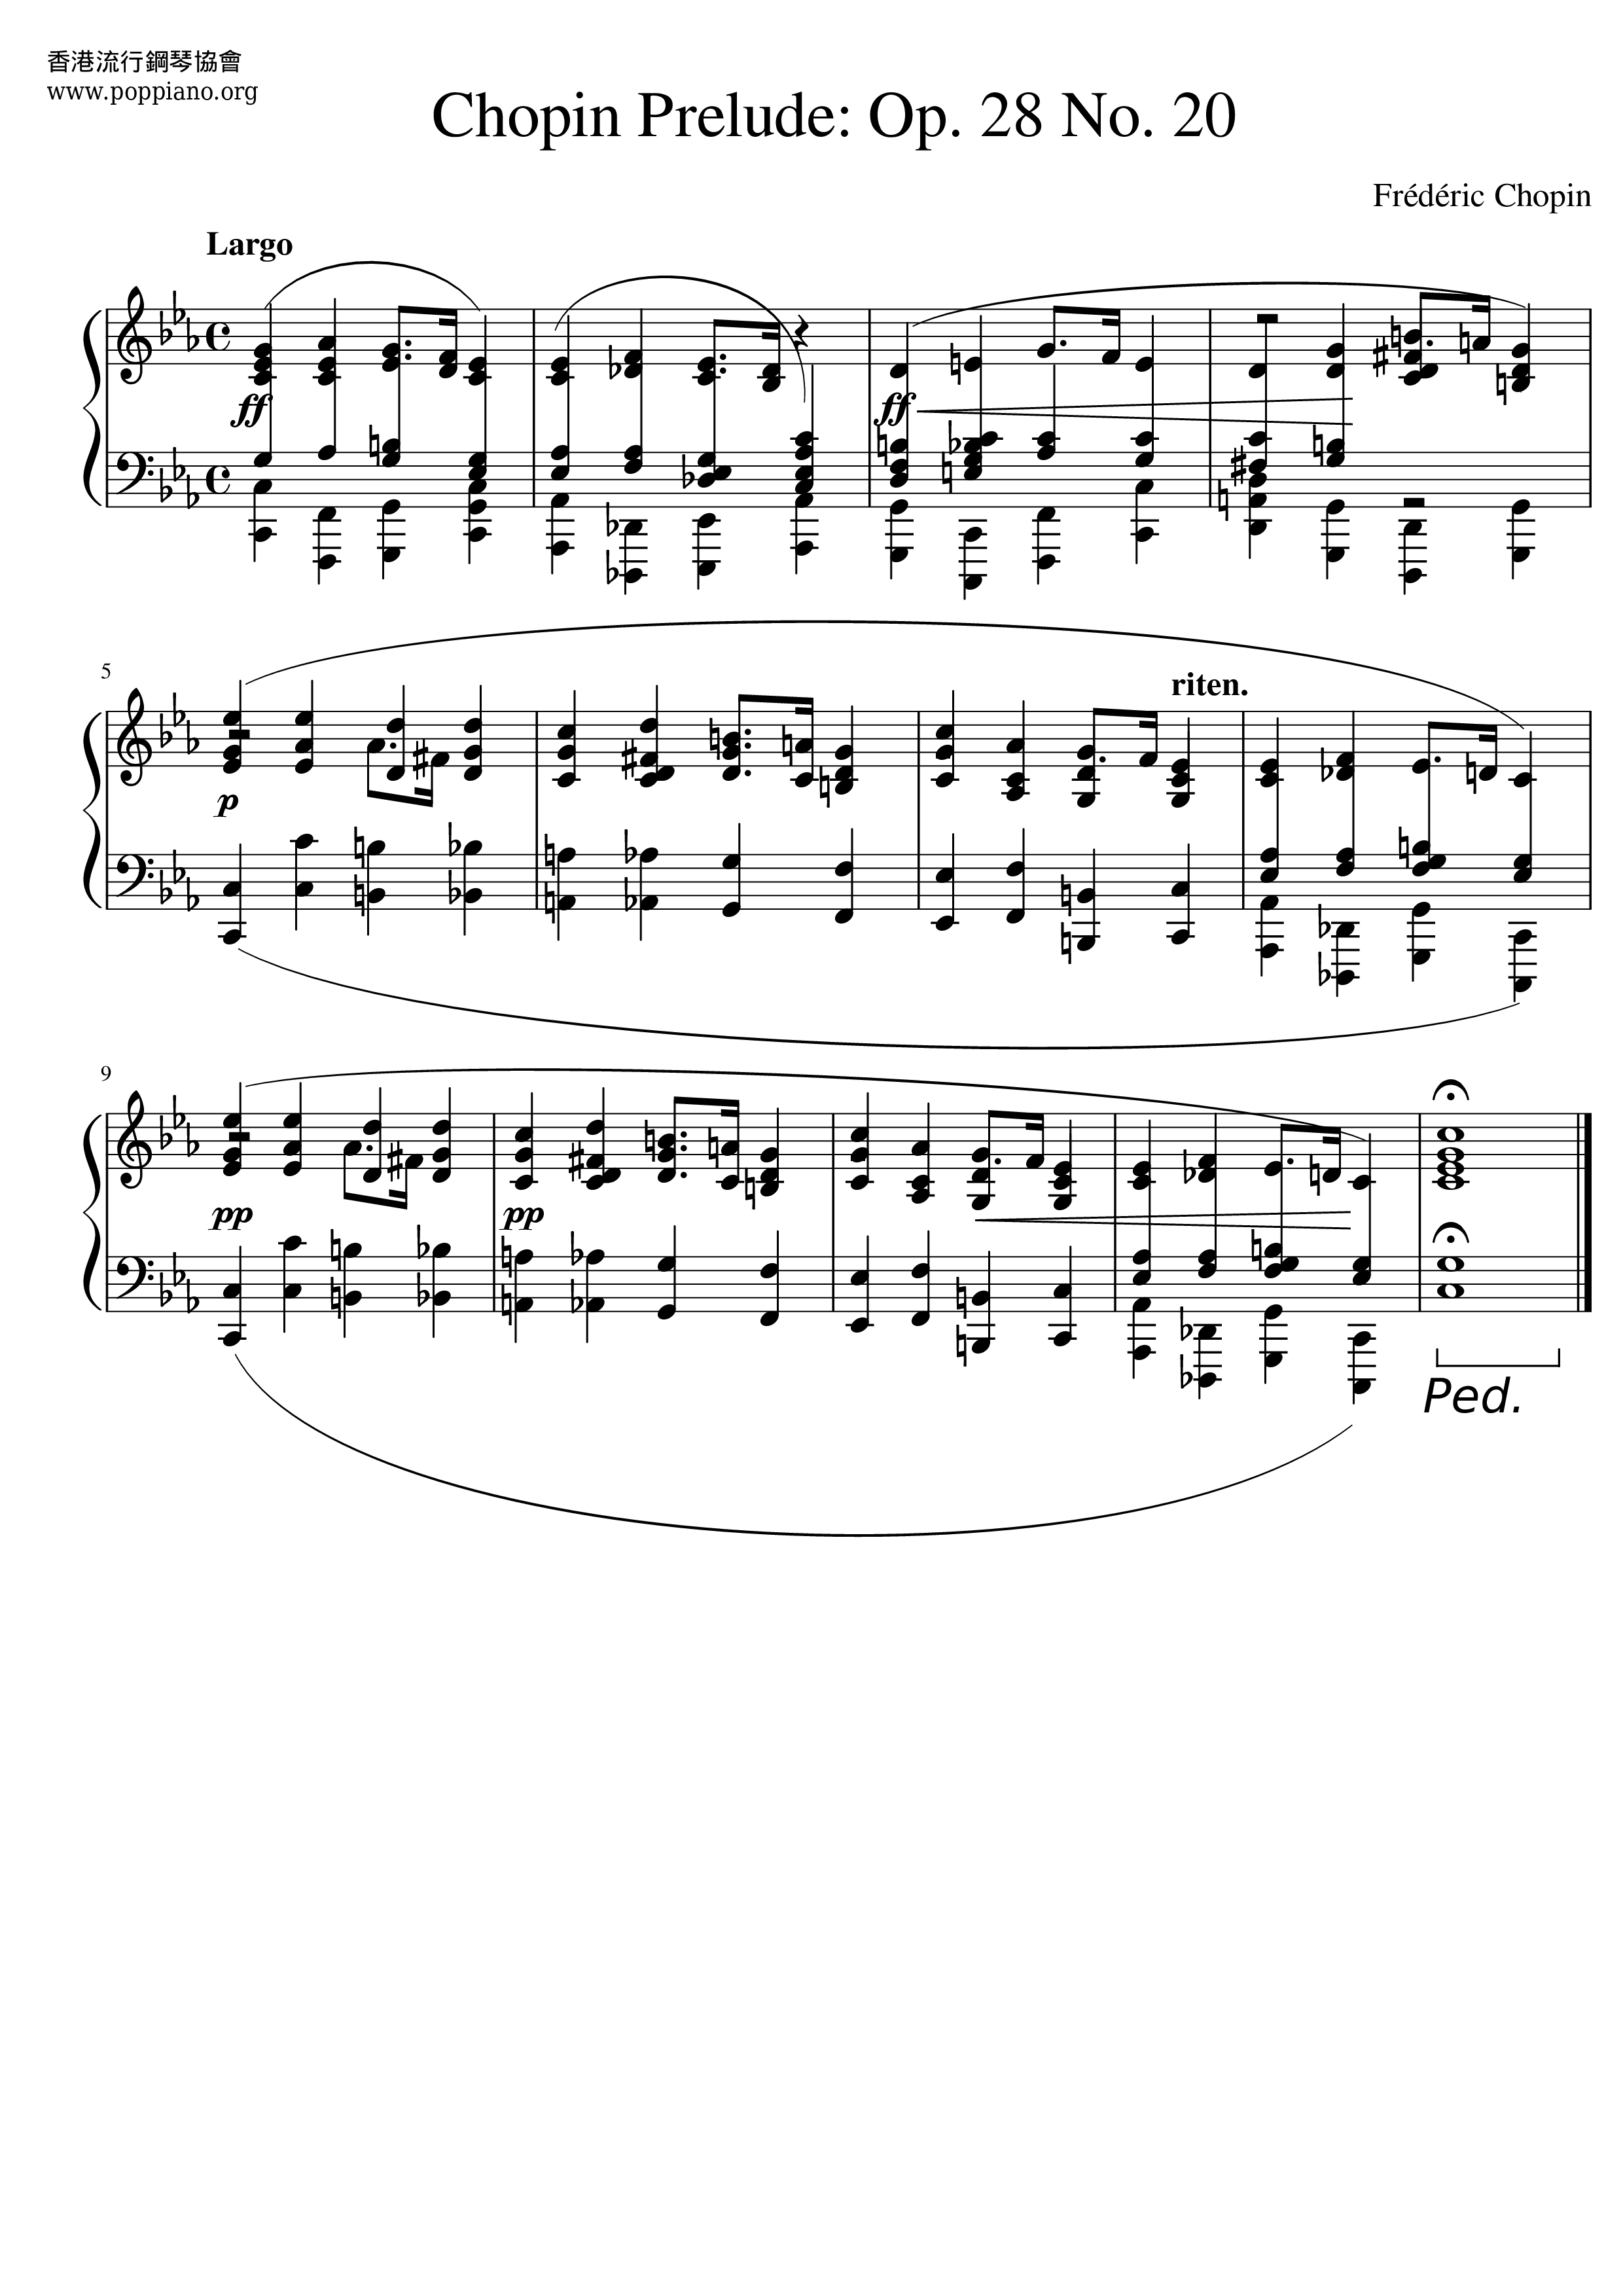 Prelude Op. 28 No. 20ピアノ譜